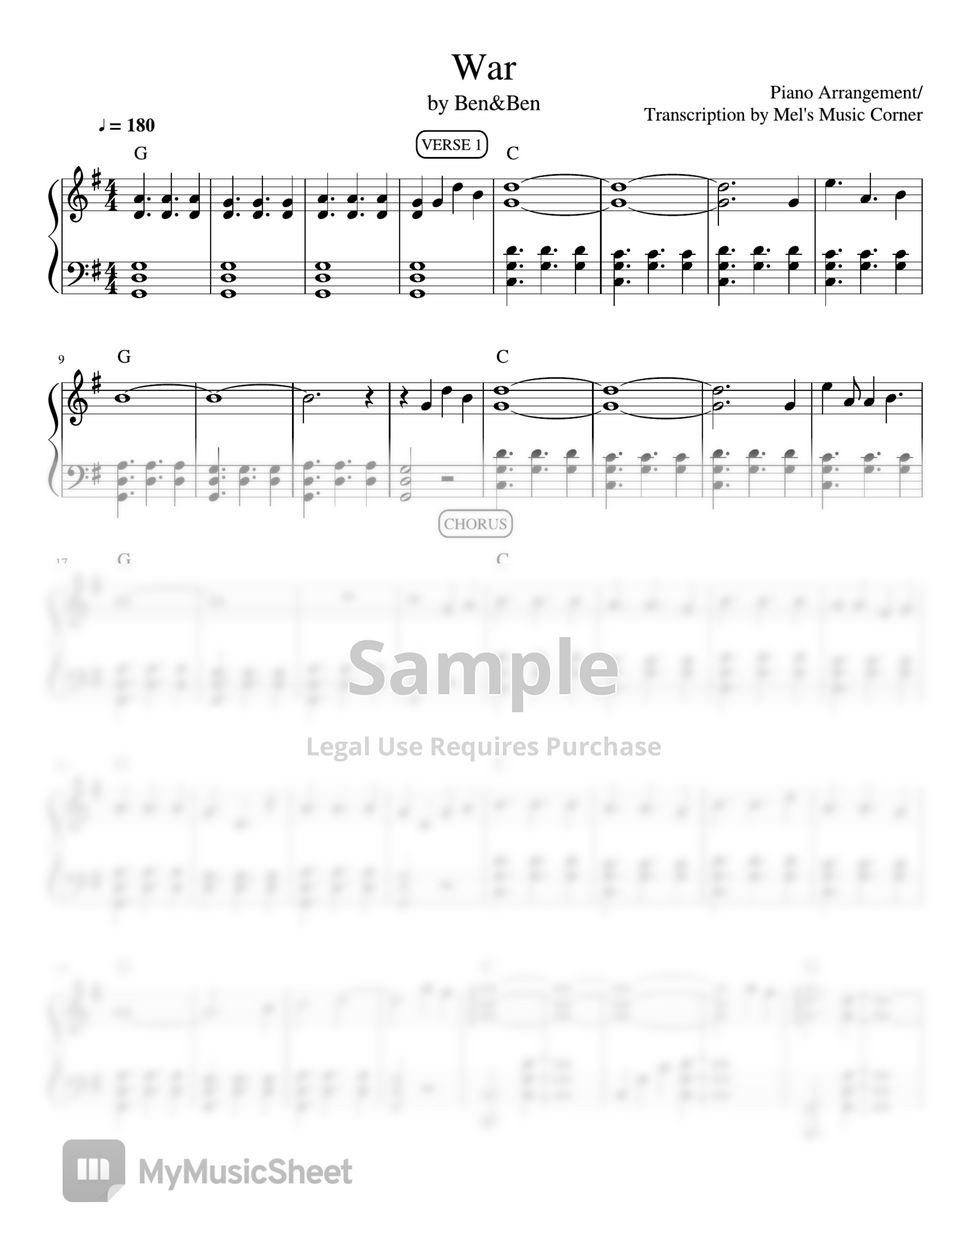 Ben&Ben - War (piano sheet music) by Mel's Music Corner